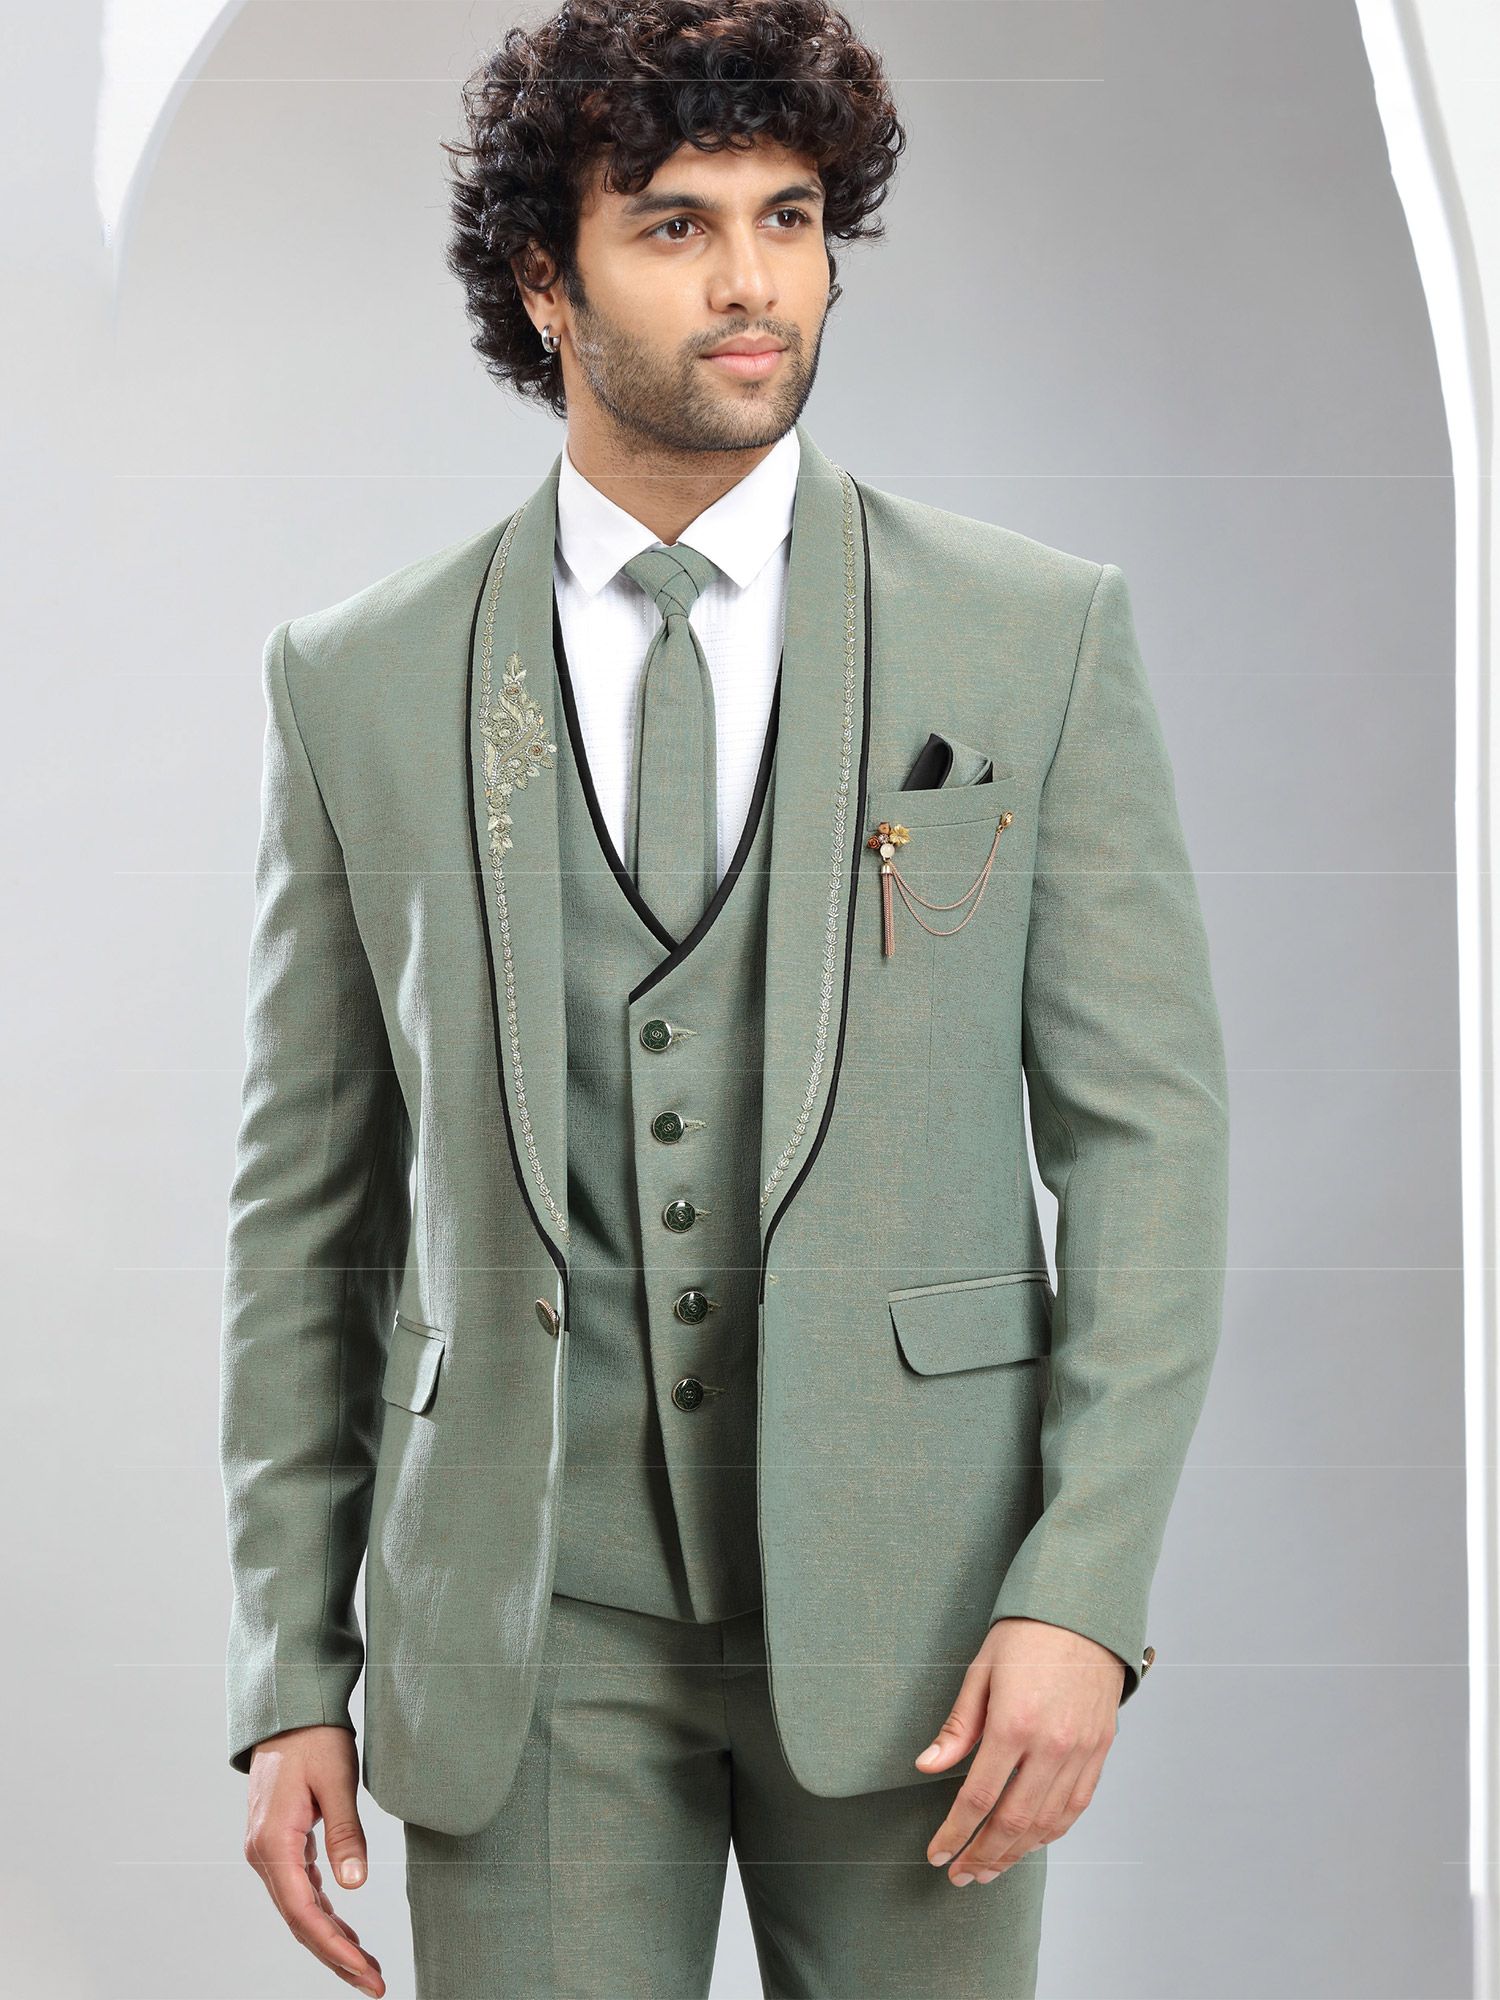 Green Suits for Men | Wedding Suits for Men | Slim Fit Suit | SAINLY